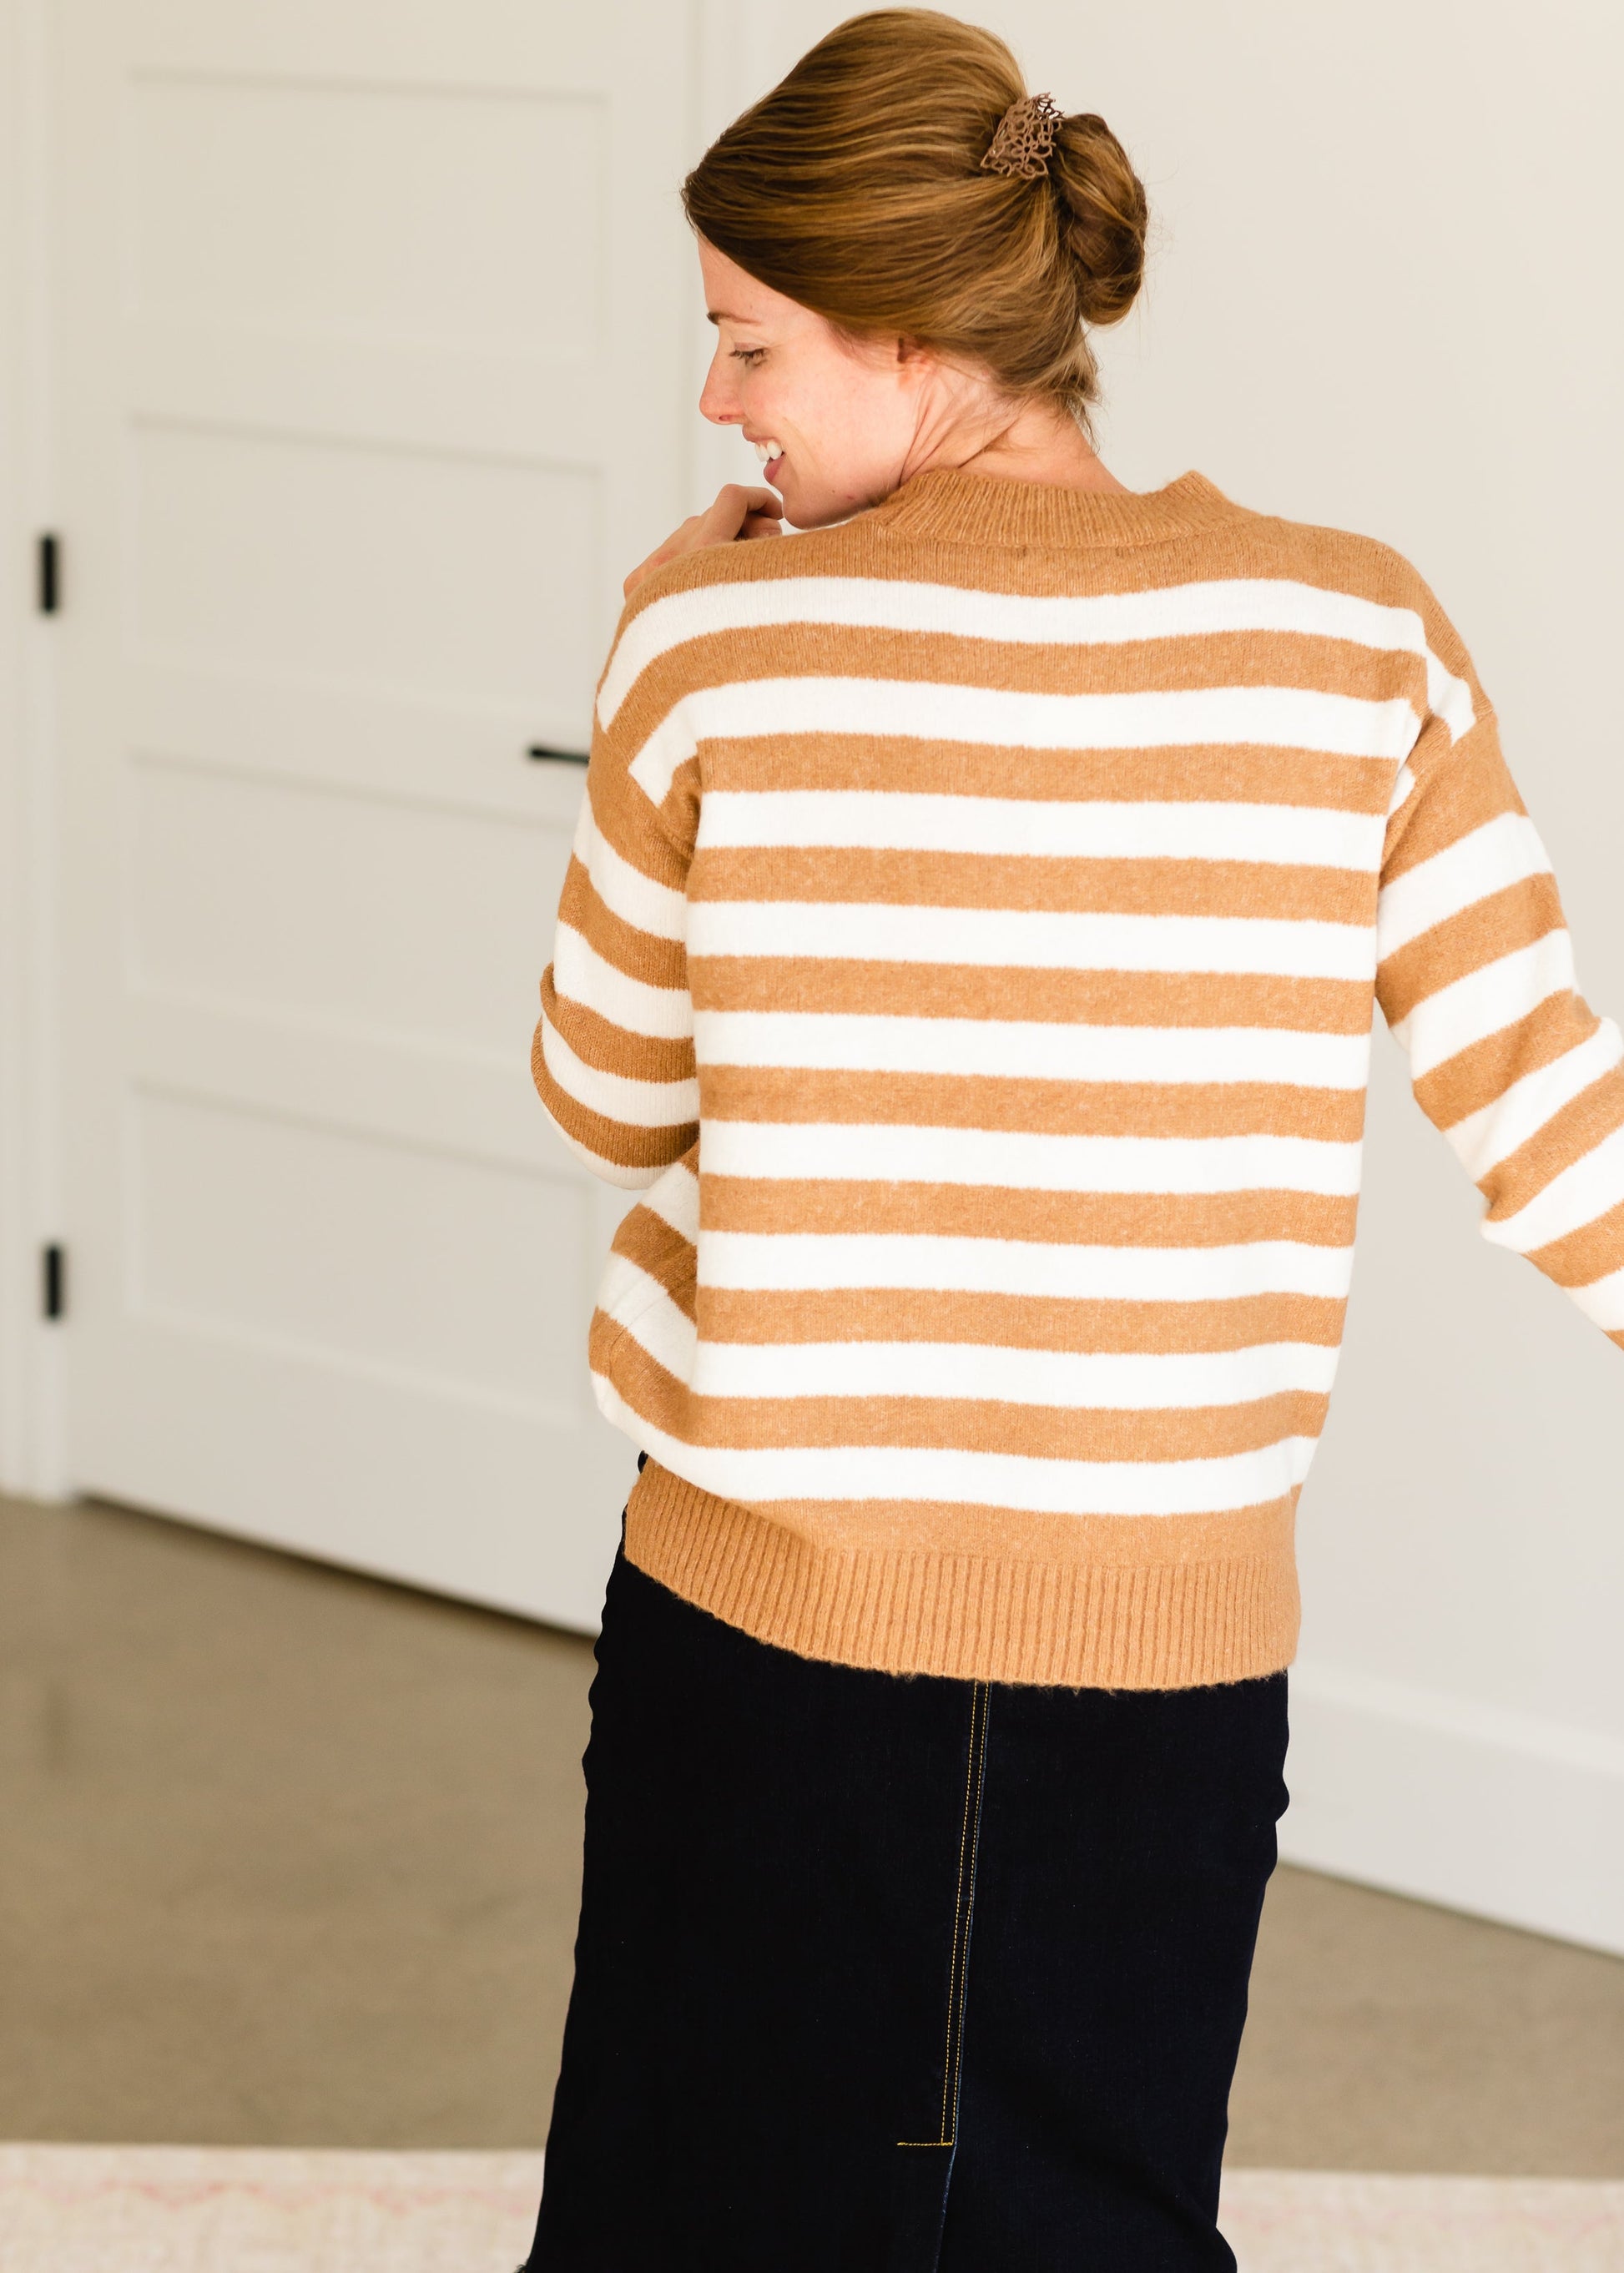 Camel Crew Neck Striped Sweater - FINAL SALE Tops